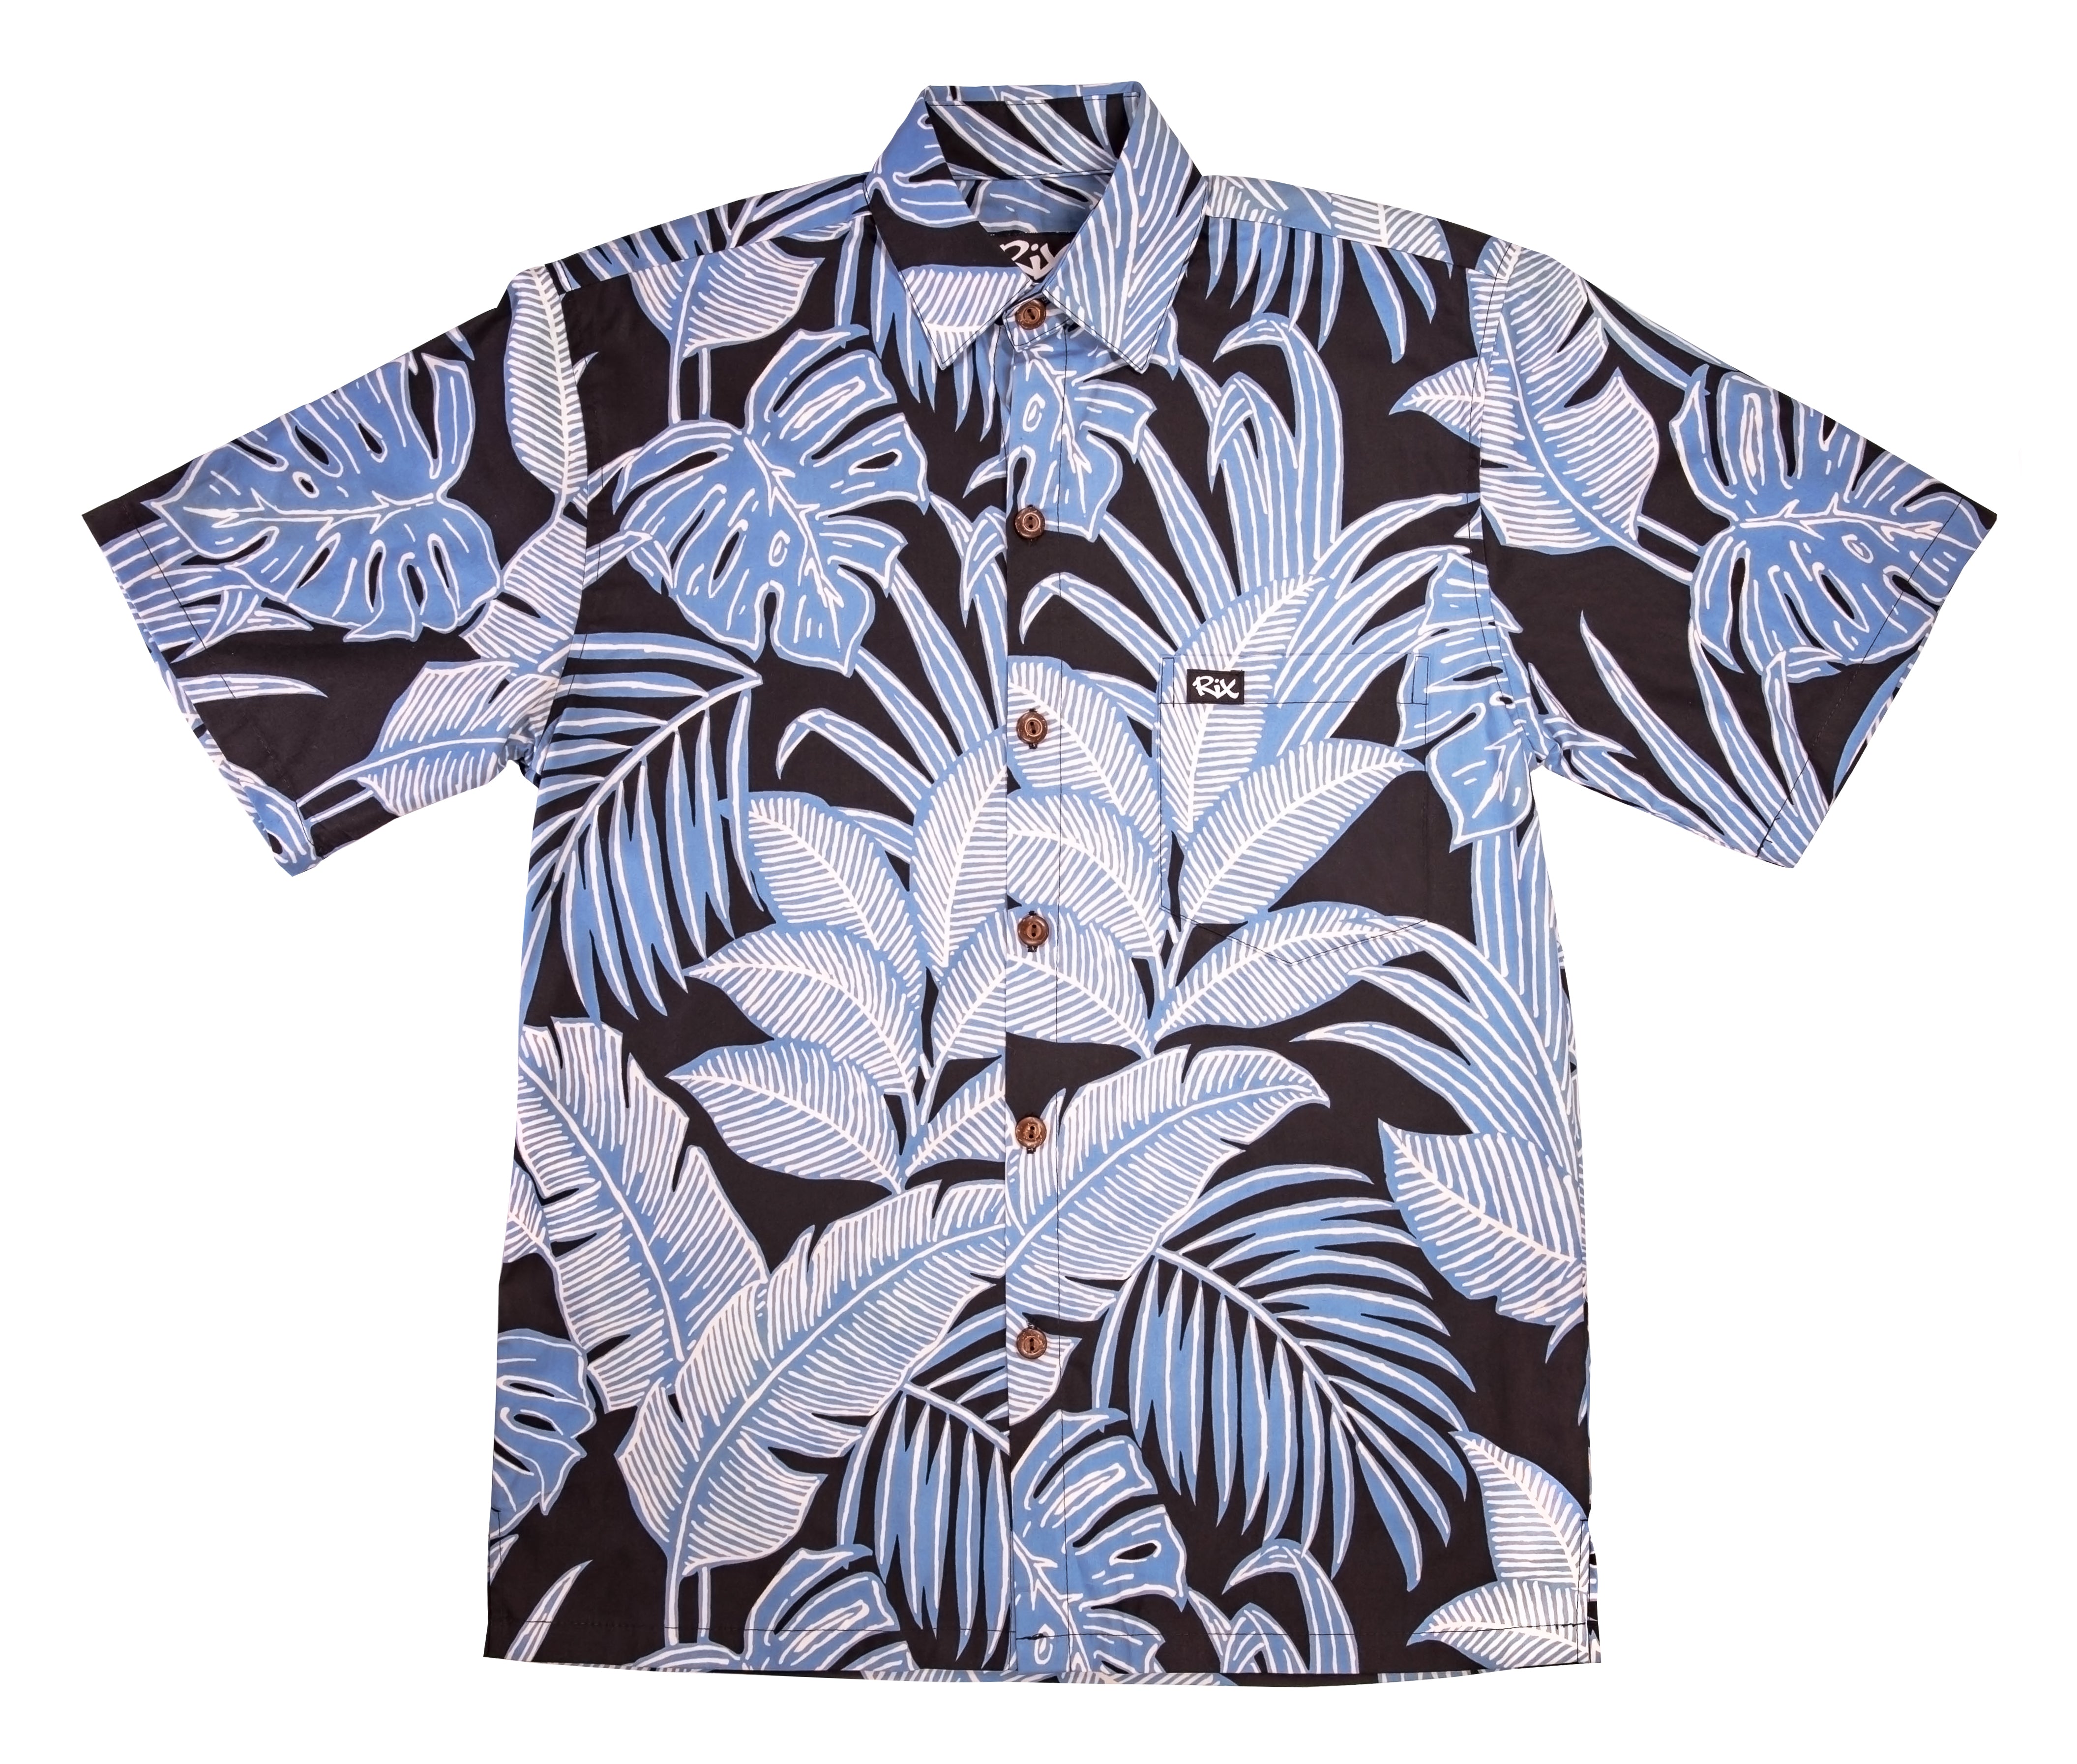 Men's Aloha Shirts | Rix Island Wear | Top Selling Hawaiian Shirts